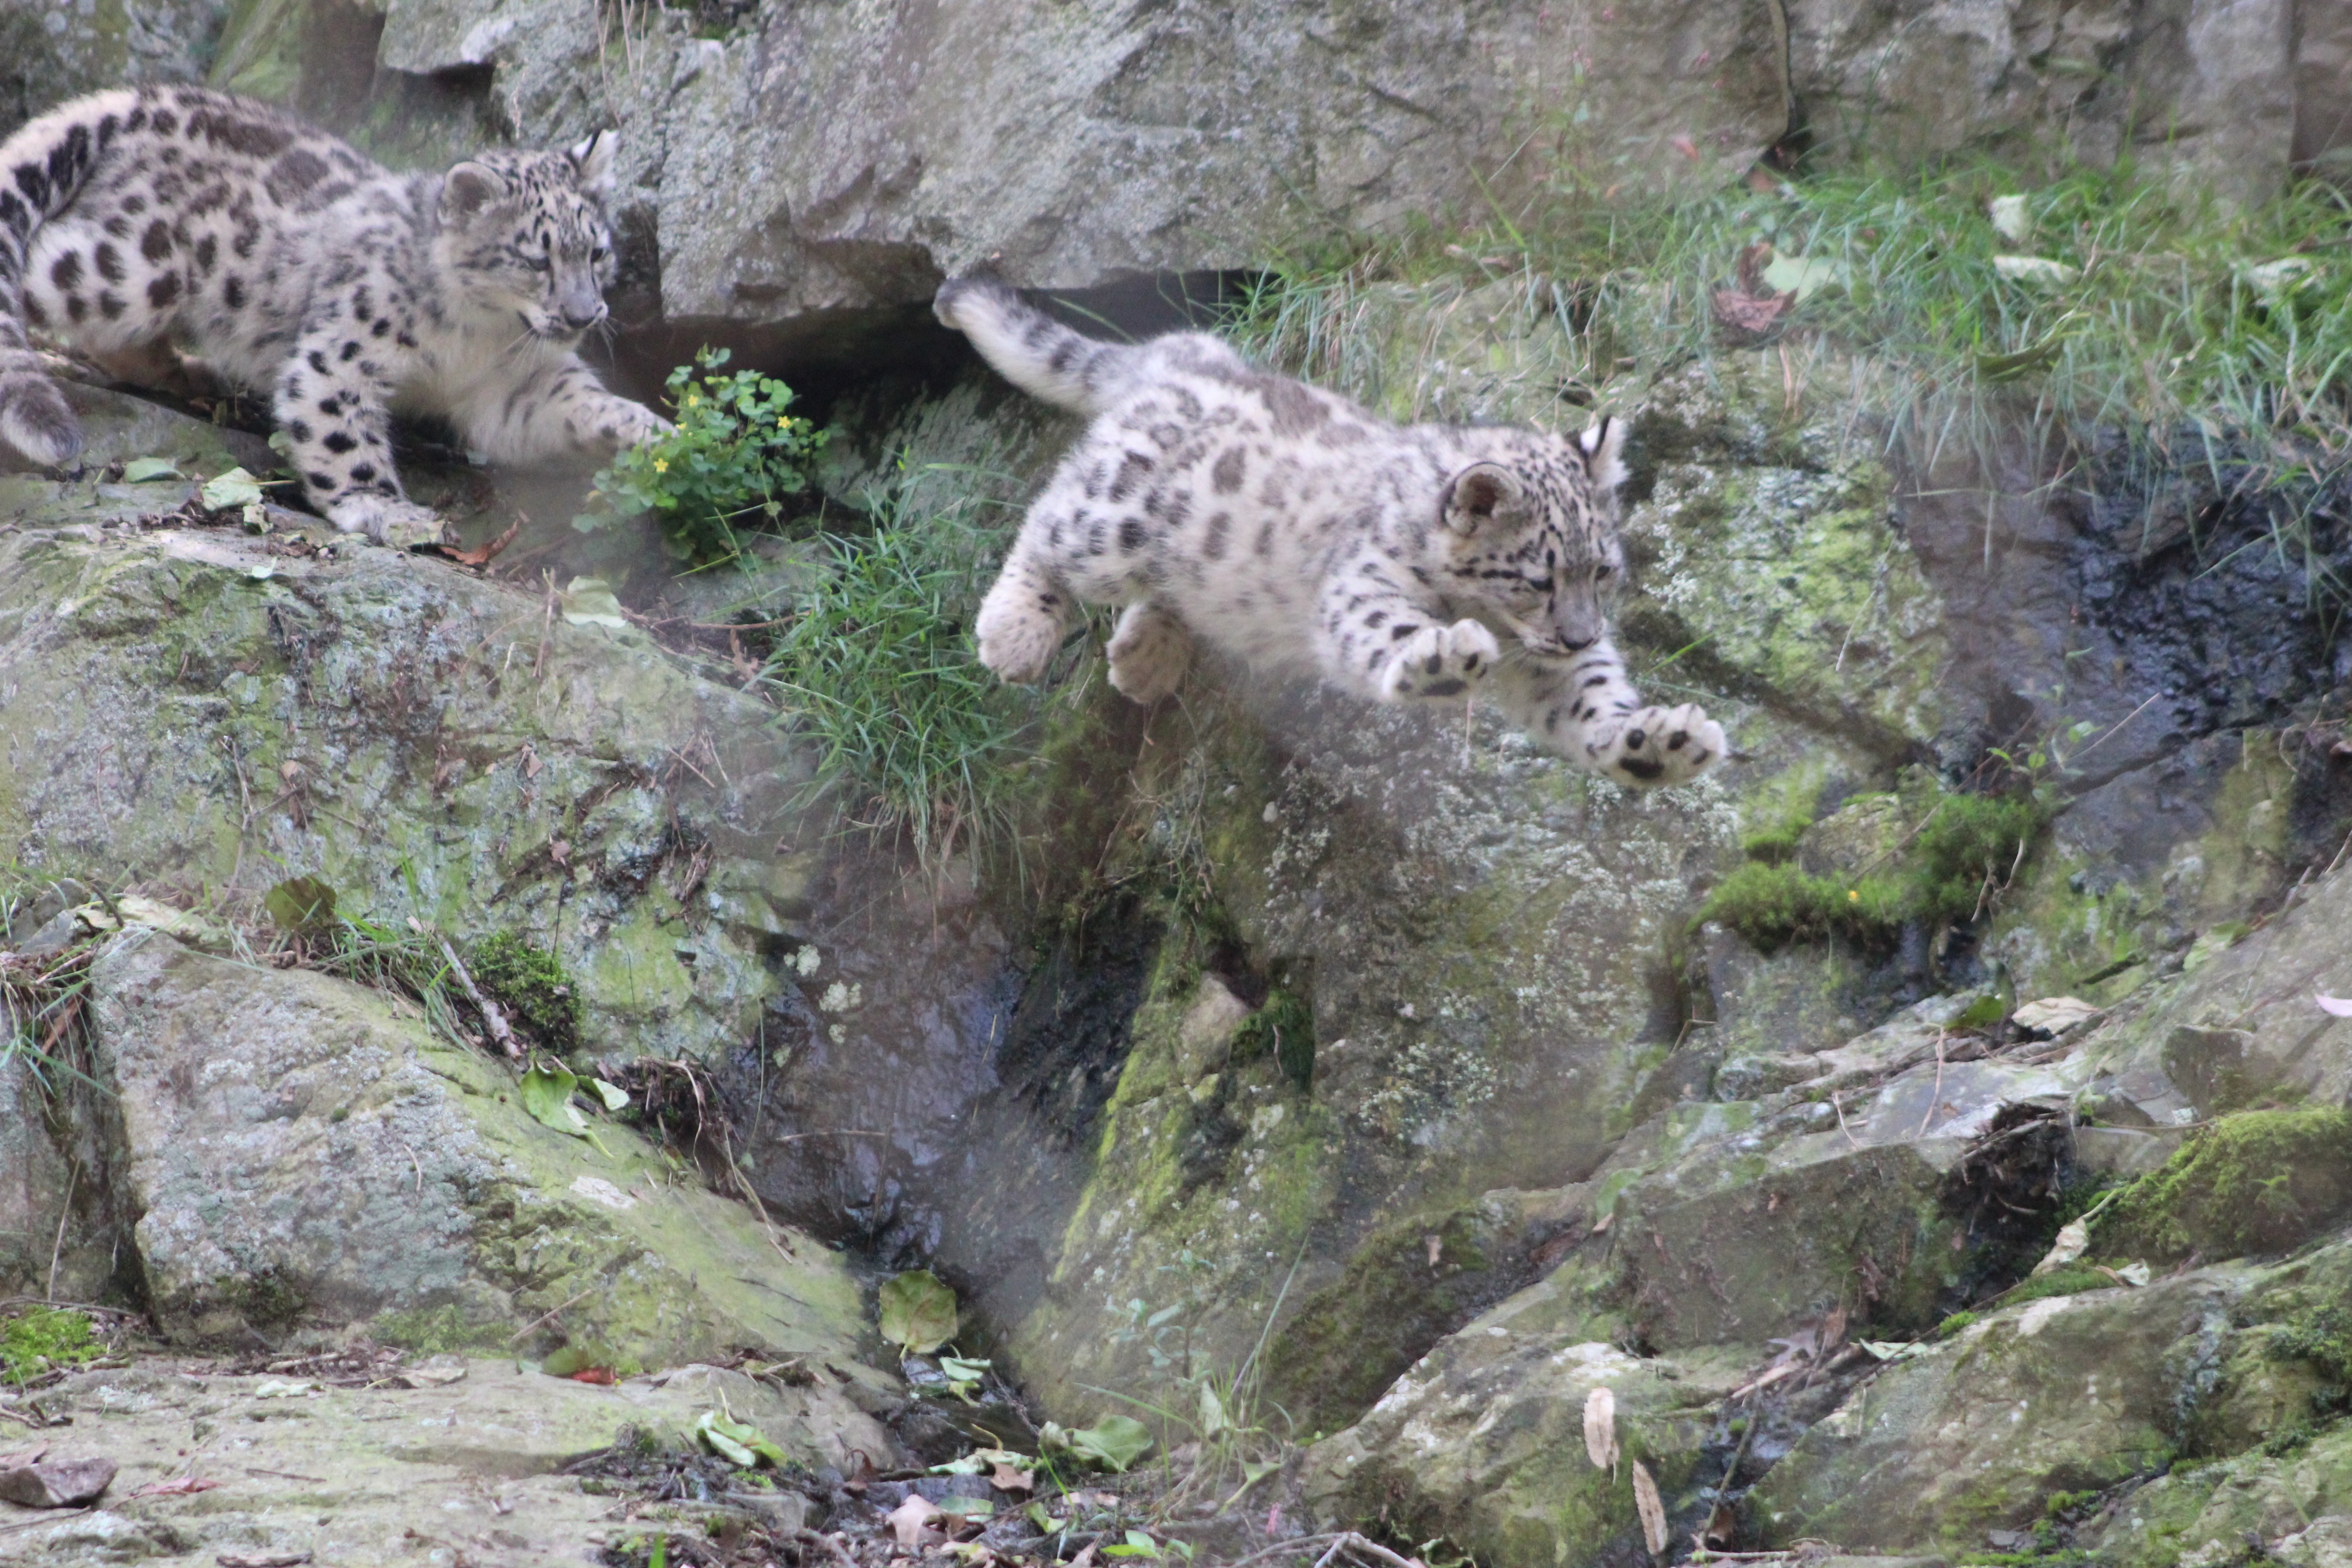 A snow leopard cub